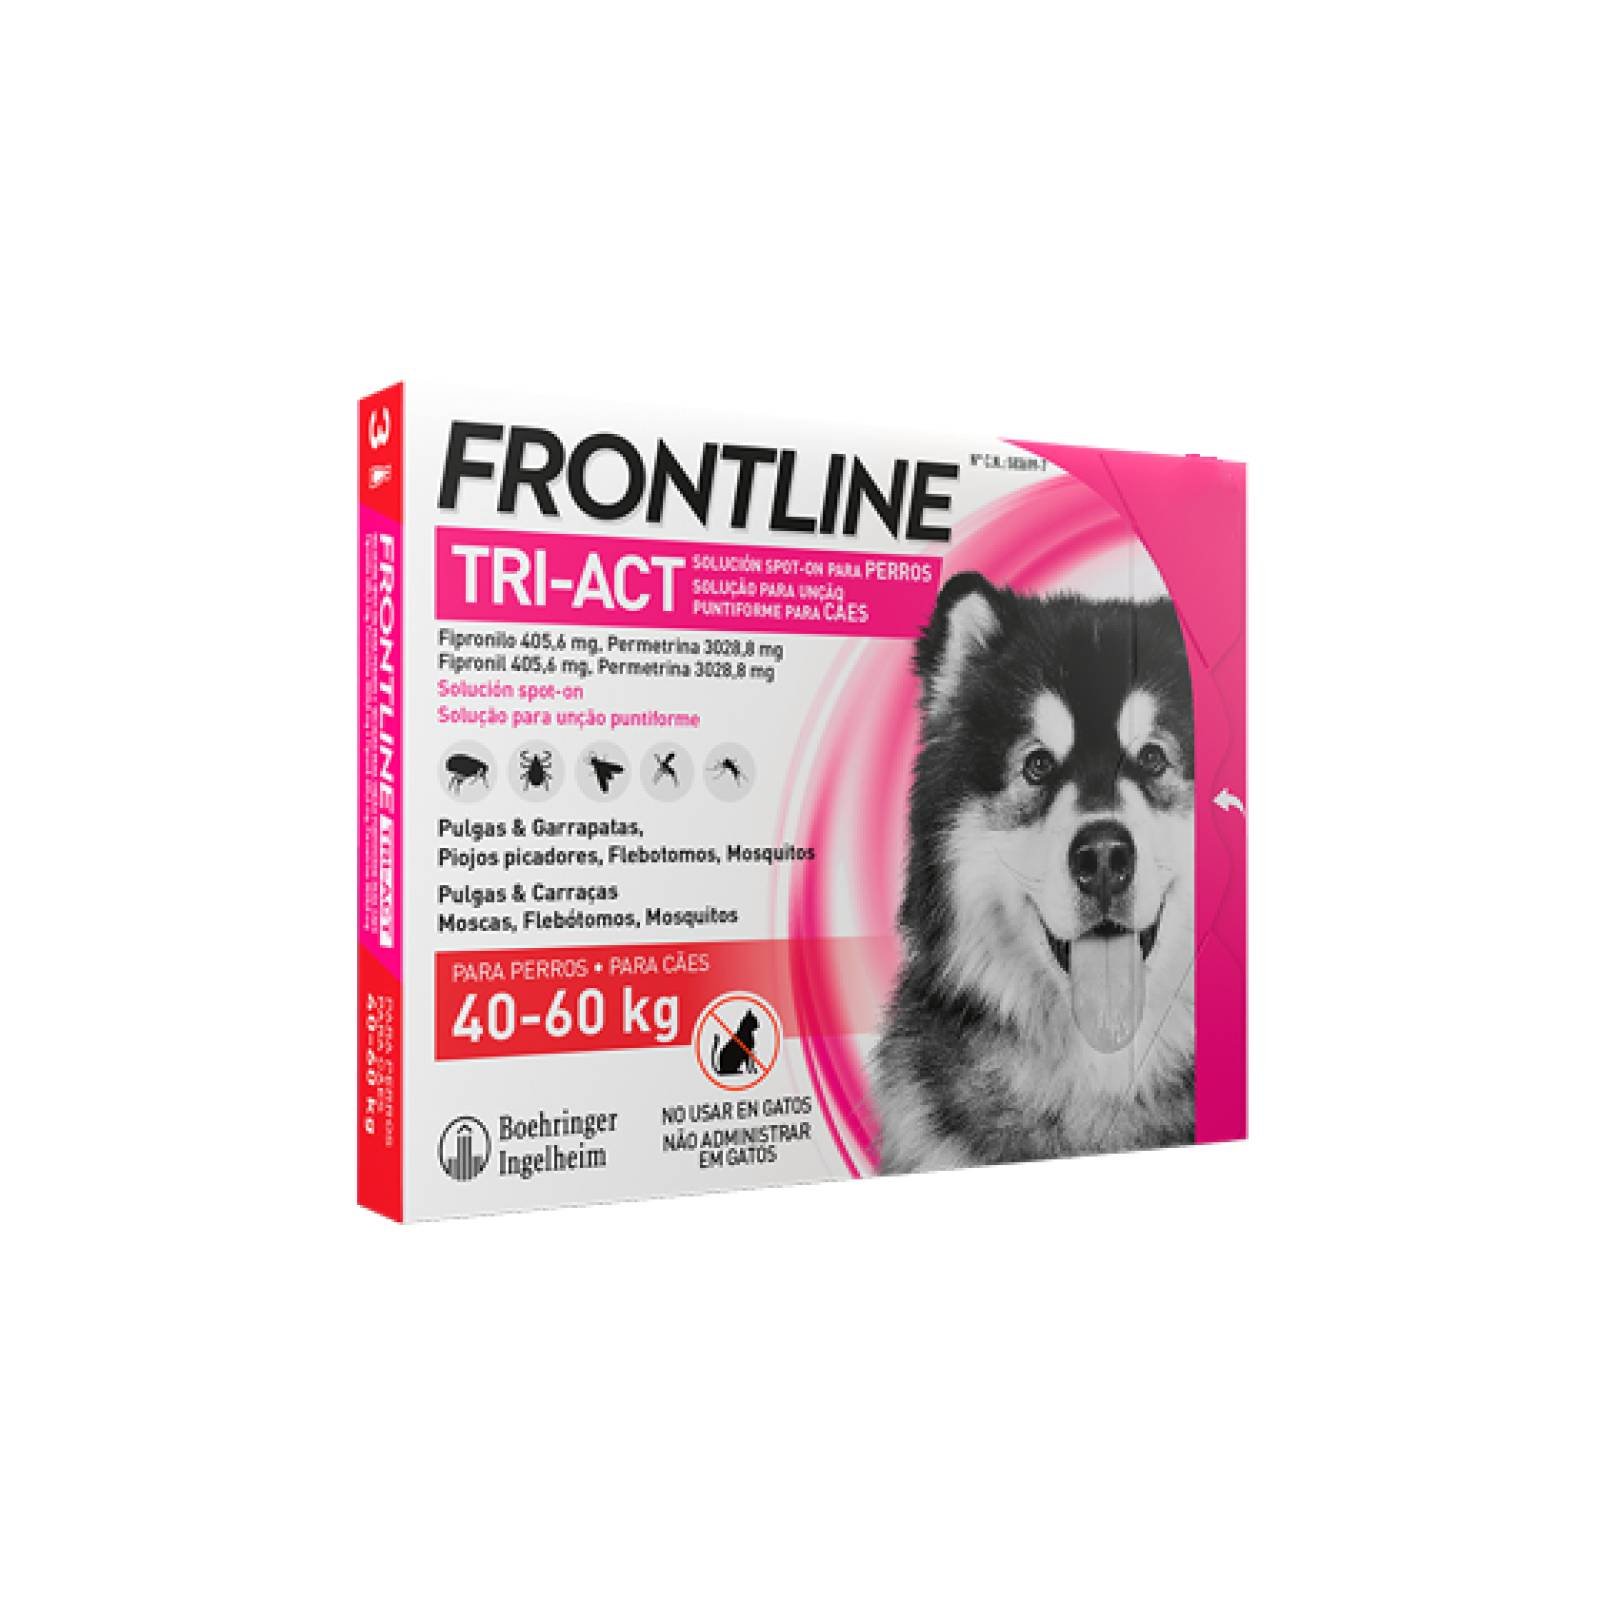 Frontline Tri-act Antiparasitario para Perro XL (40-60 KG) 3 pipeta